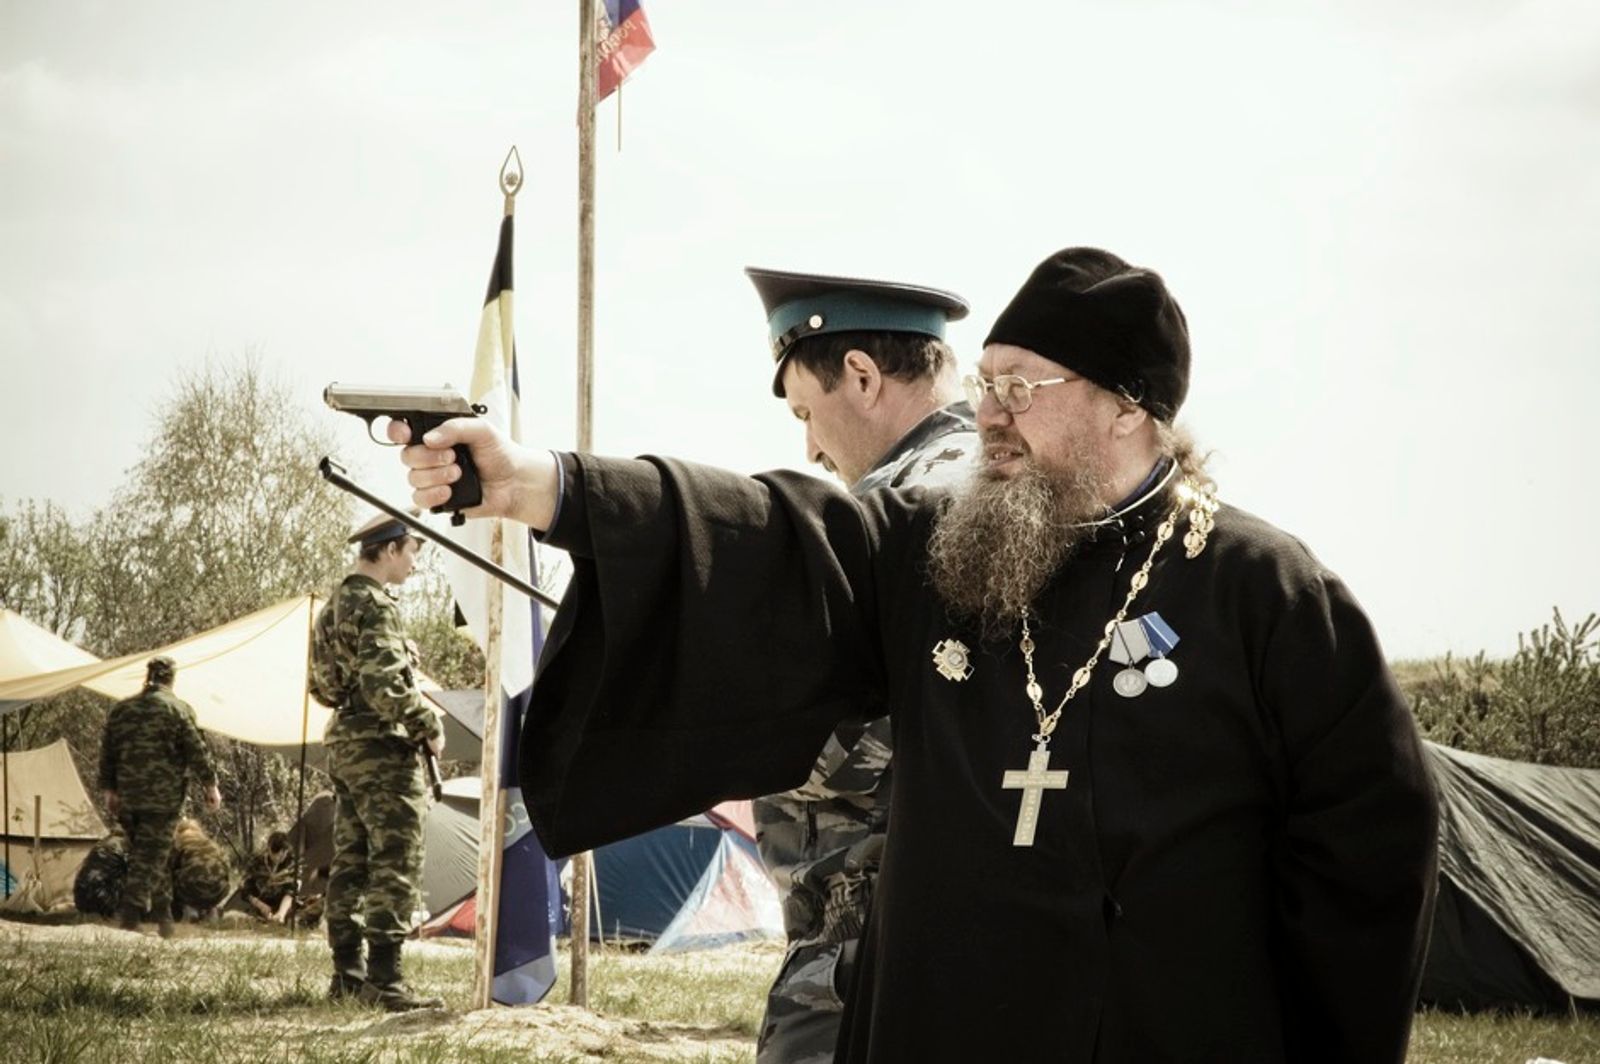 © Denis Tarasov - A priest of the Russian Orthodox Church firing a hand gun. Sverdlovsk region, Russia.